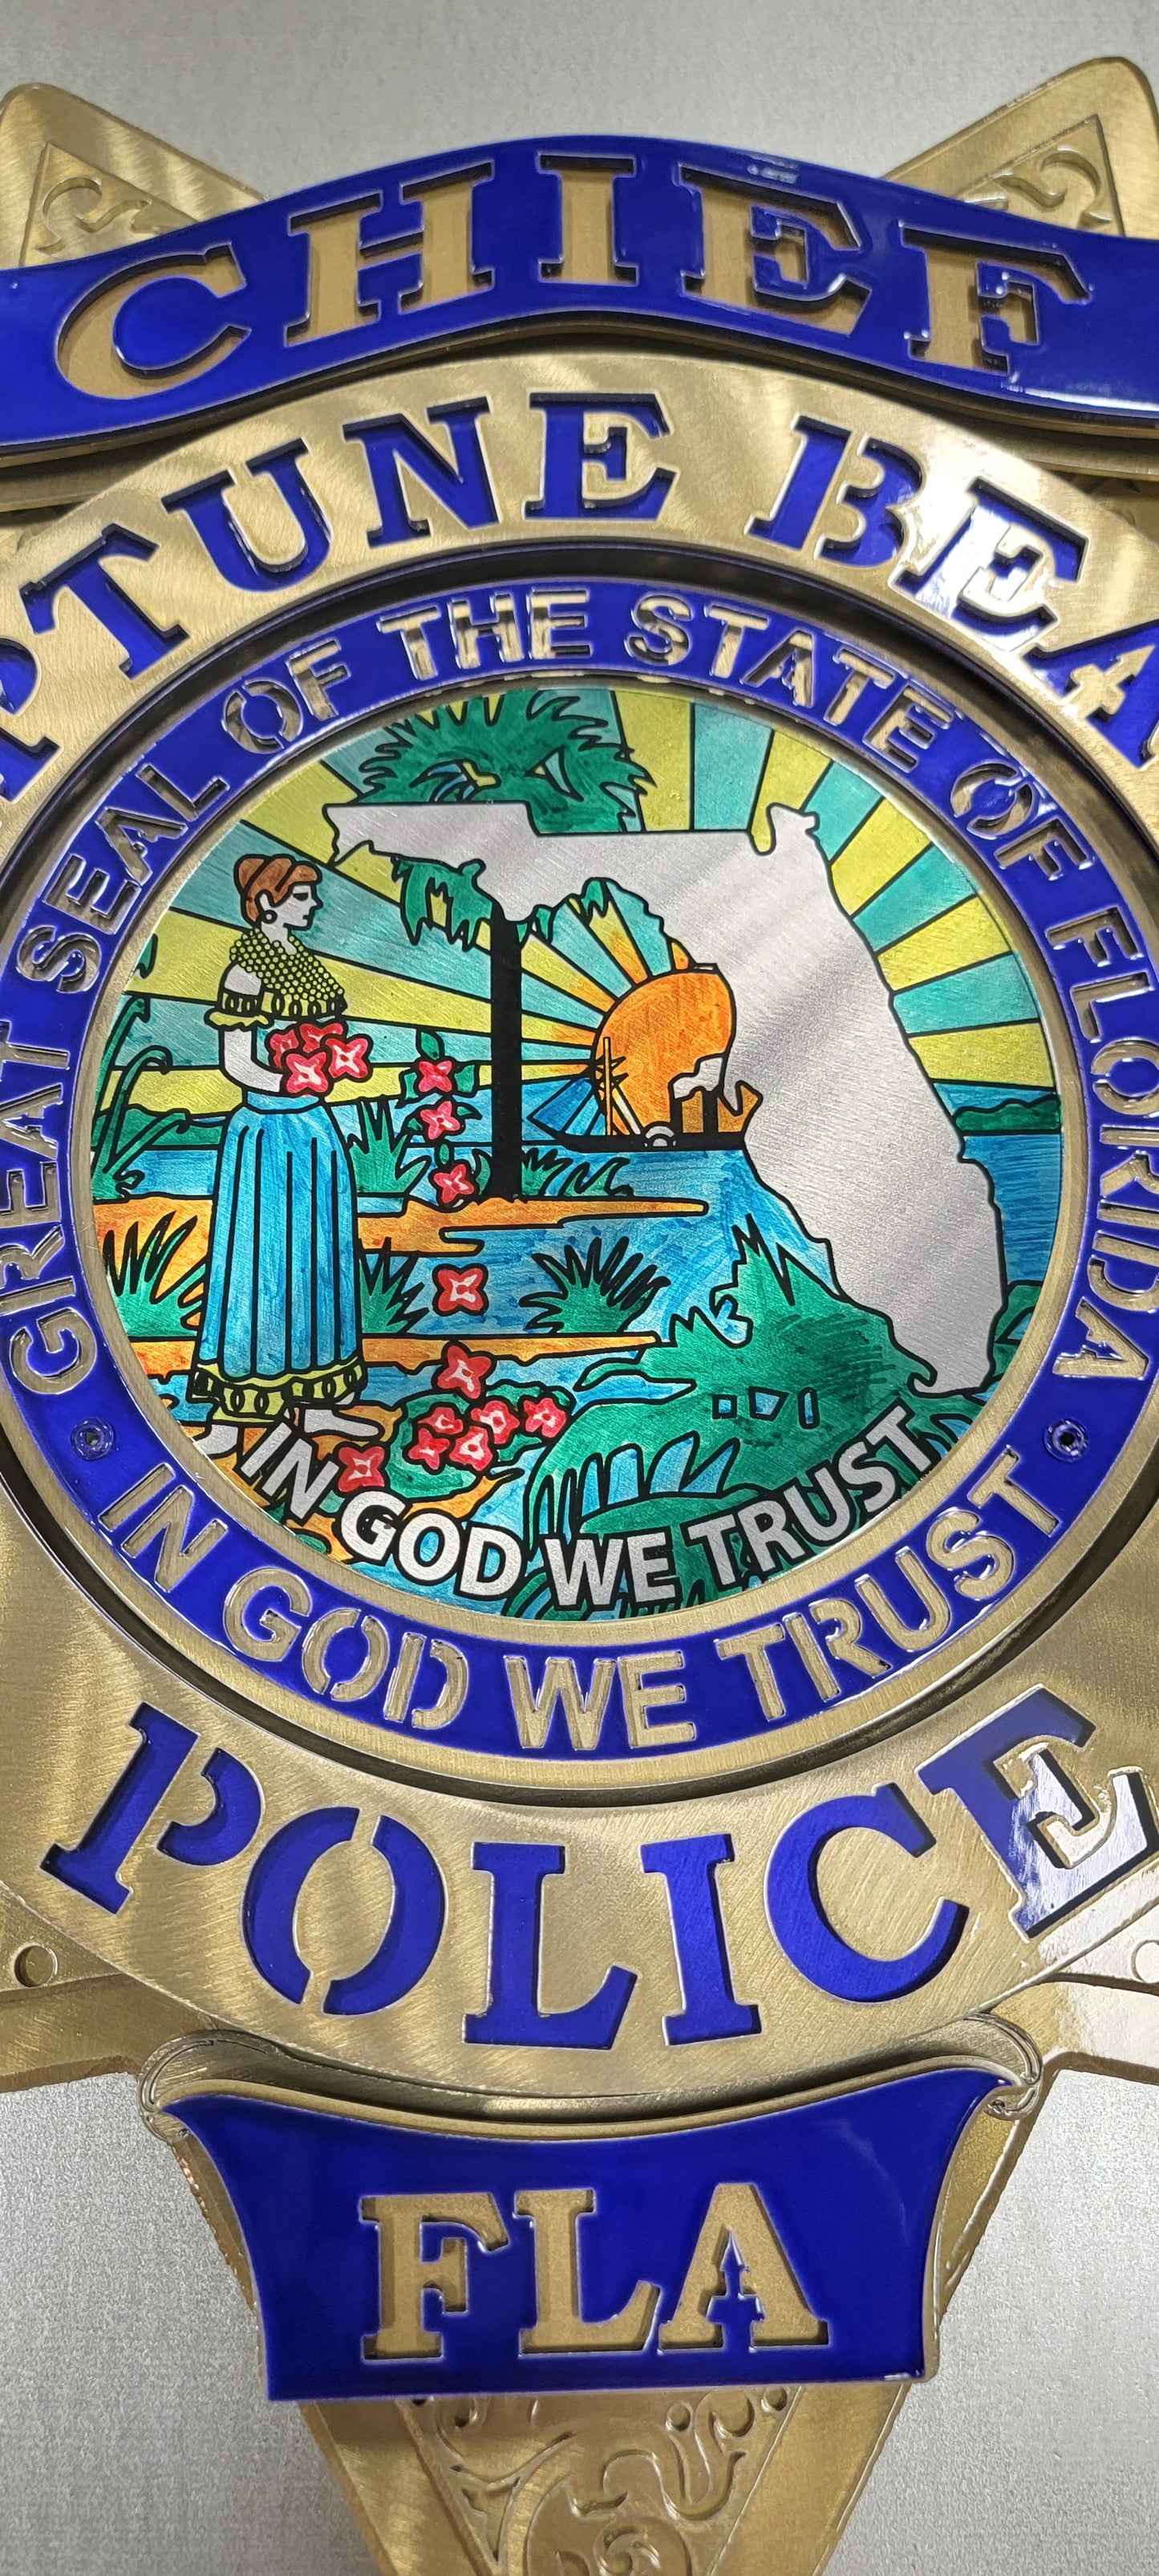 State Of Florida Neptune Beach Police Chief Star